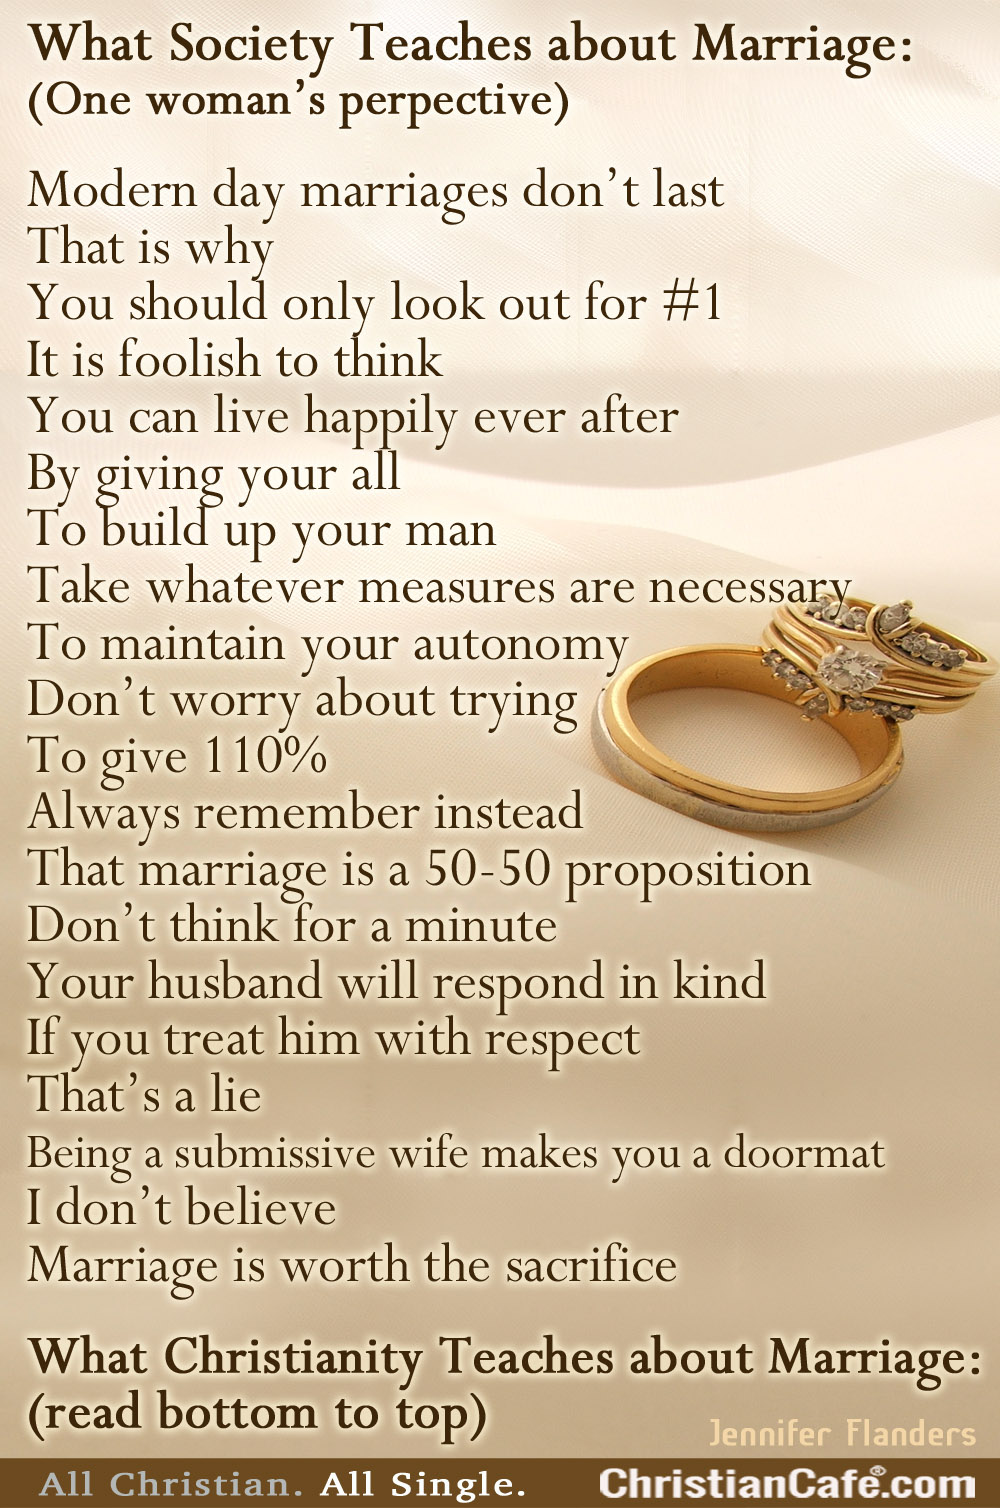 marriage definition essay